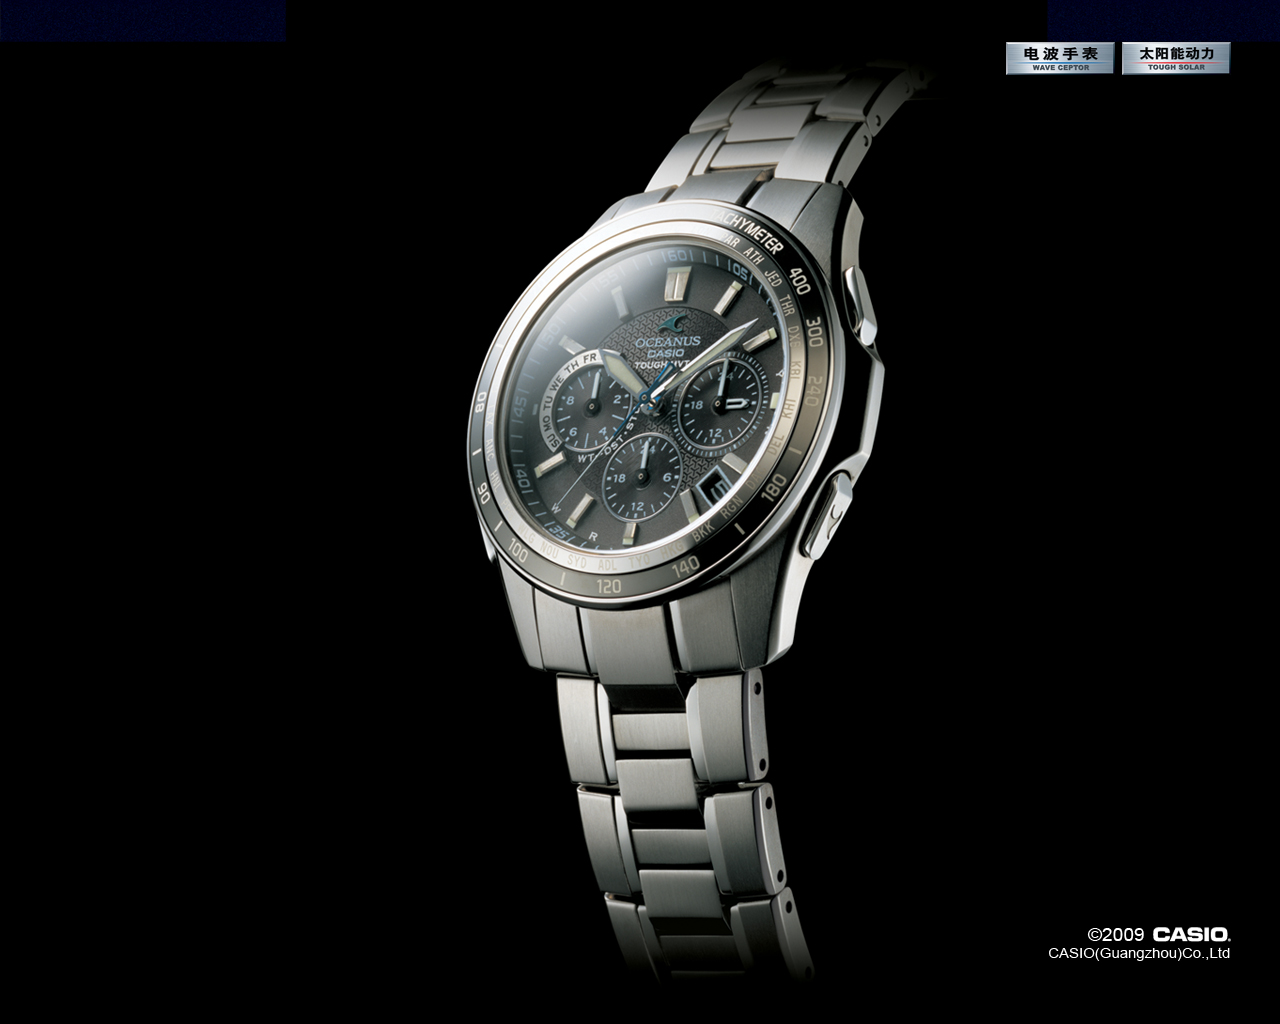 casio wallpaper,watch,analog watch,watch accessory,fashion accessory,brand